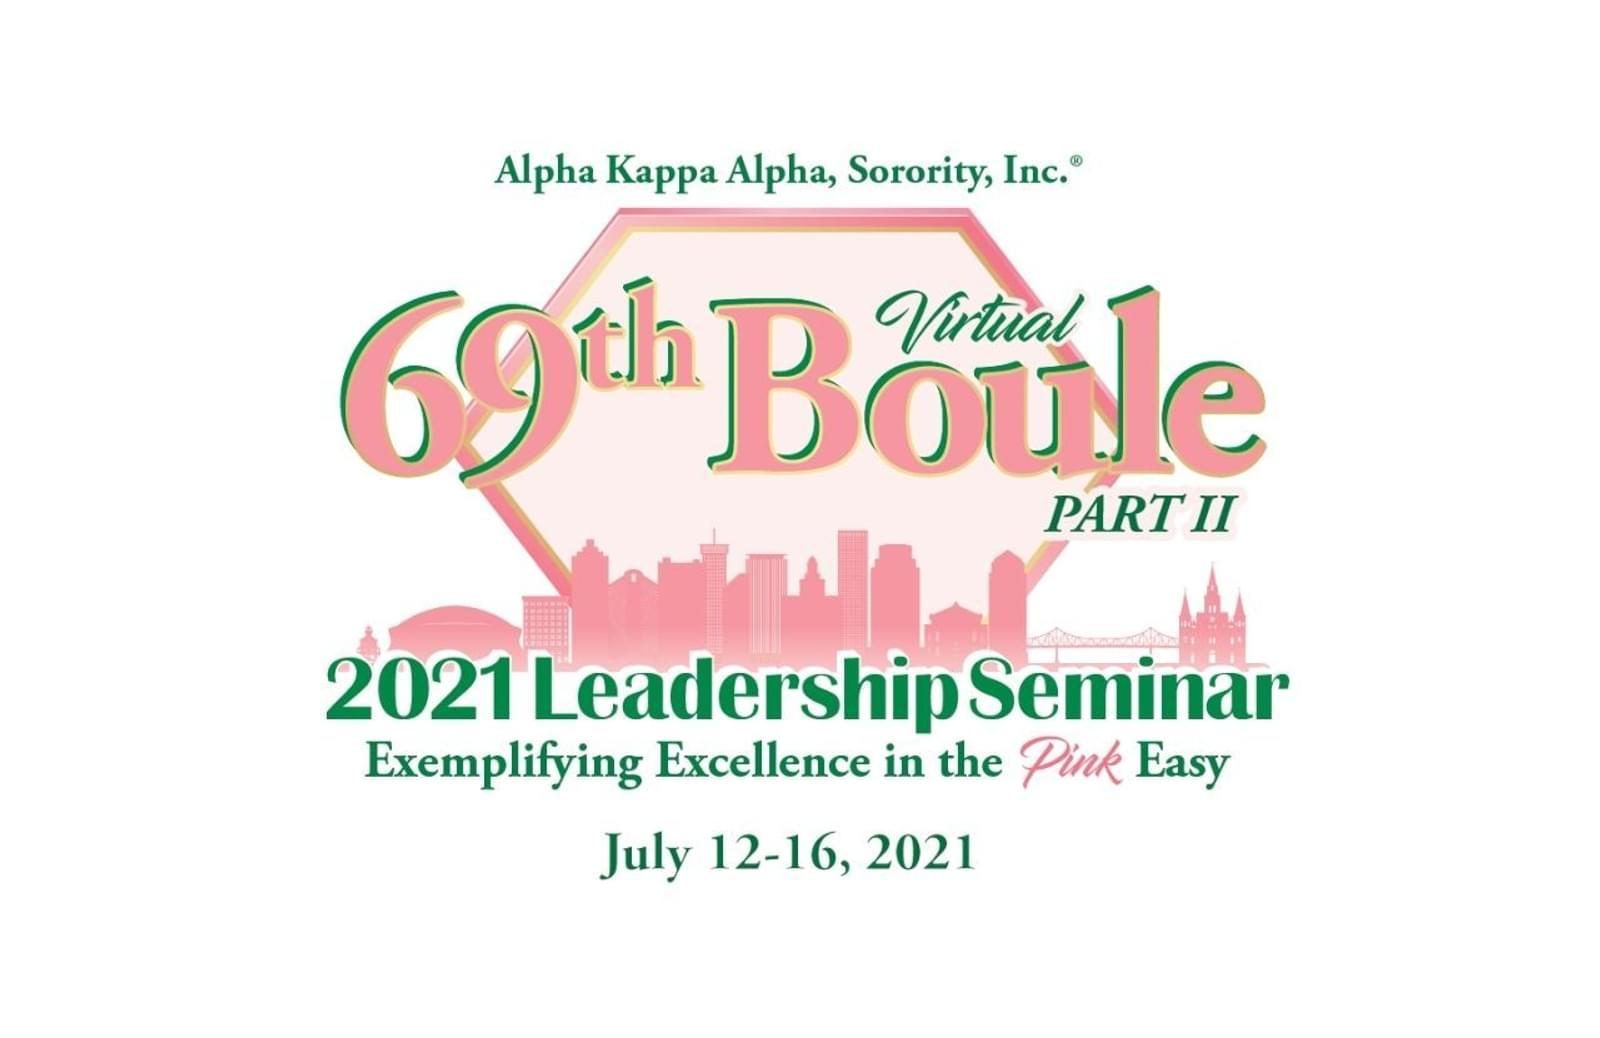 Alpha kappa alpha boule leadership seminar logo july 2021 thumbnail